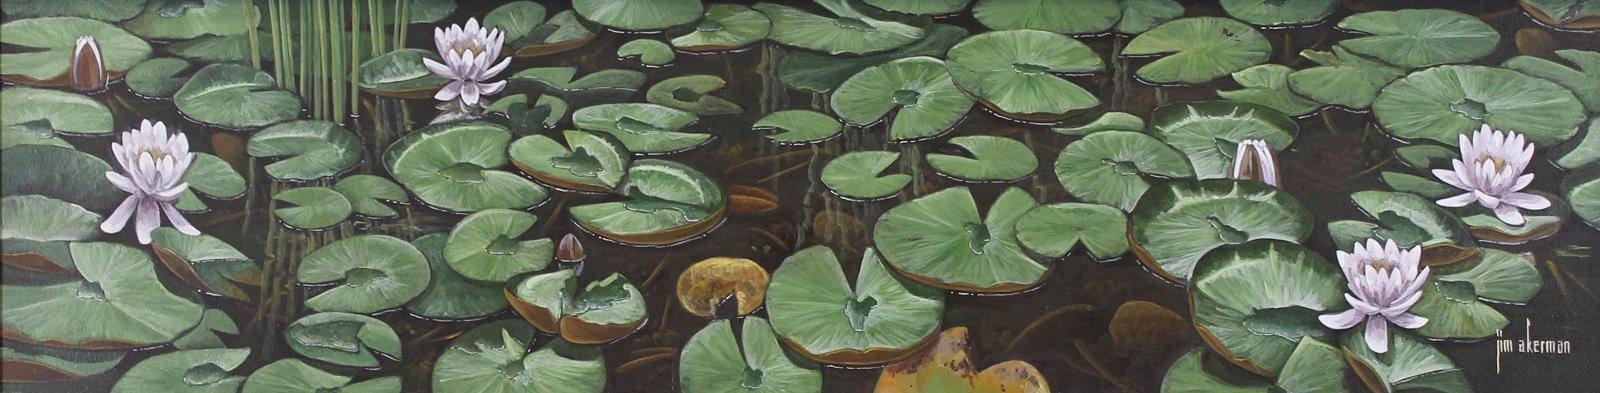 Jim Akerman - Water Lillies II; 2008